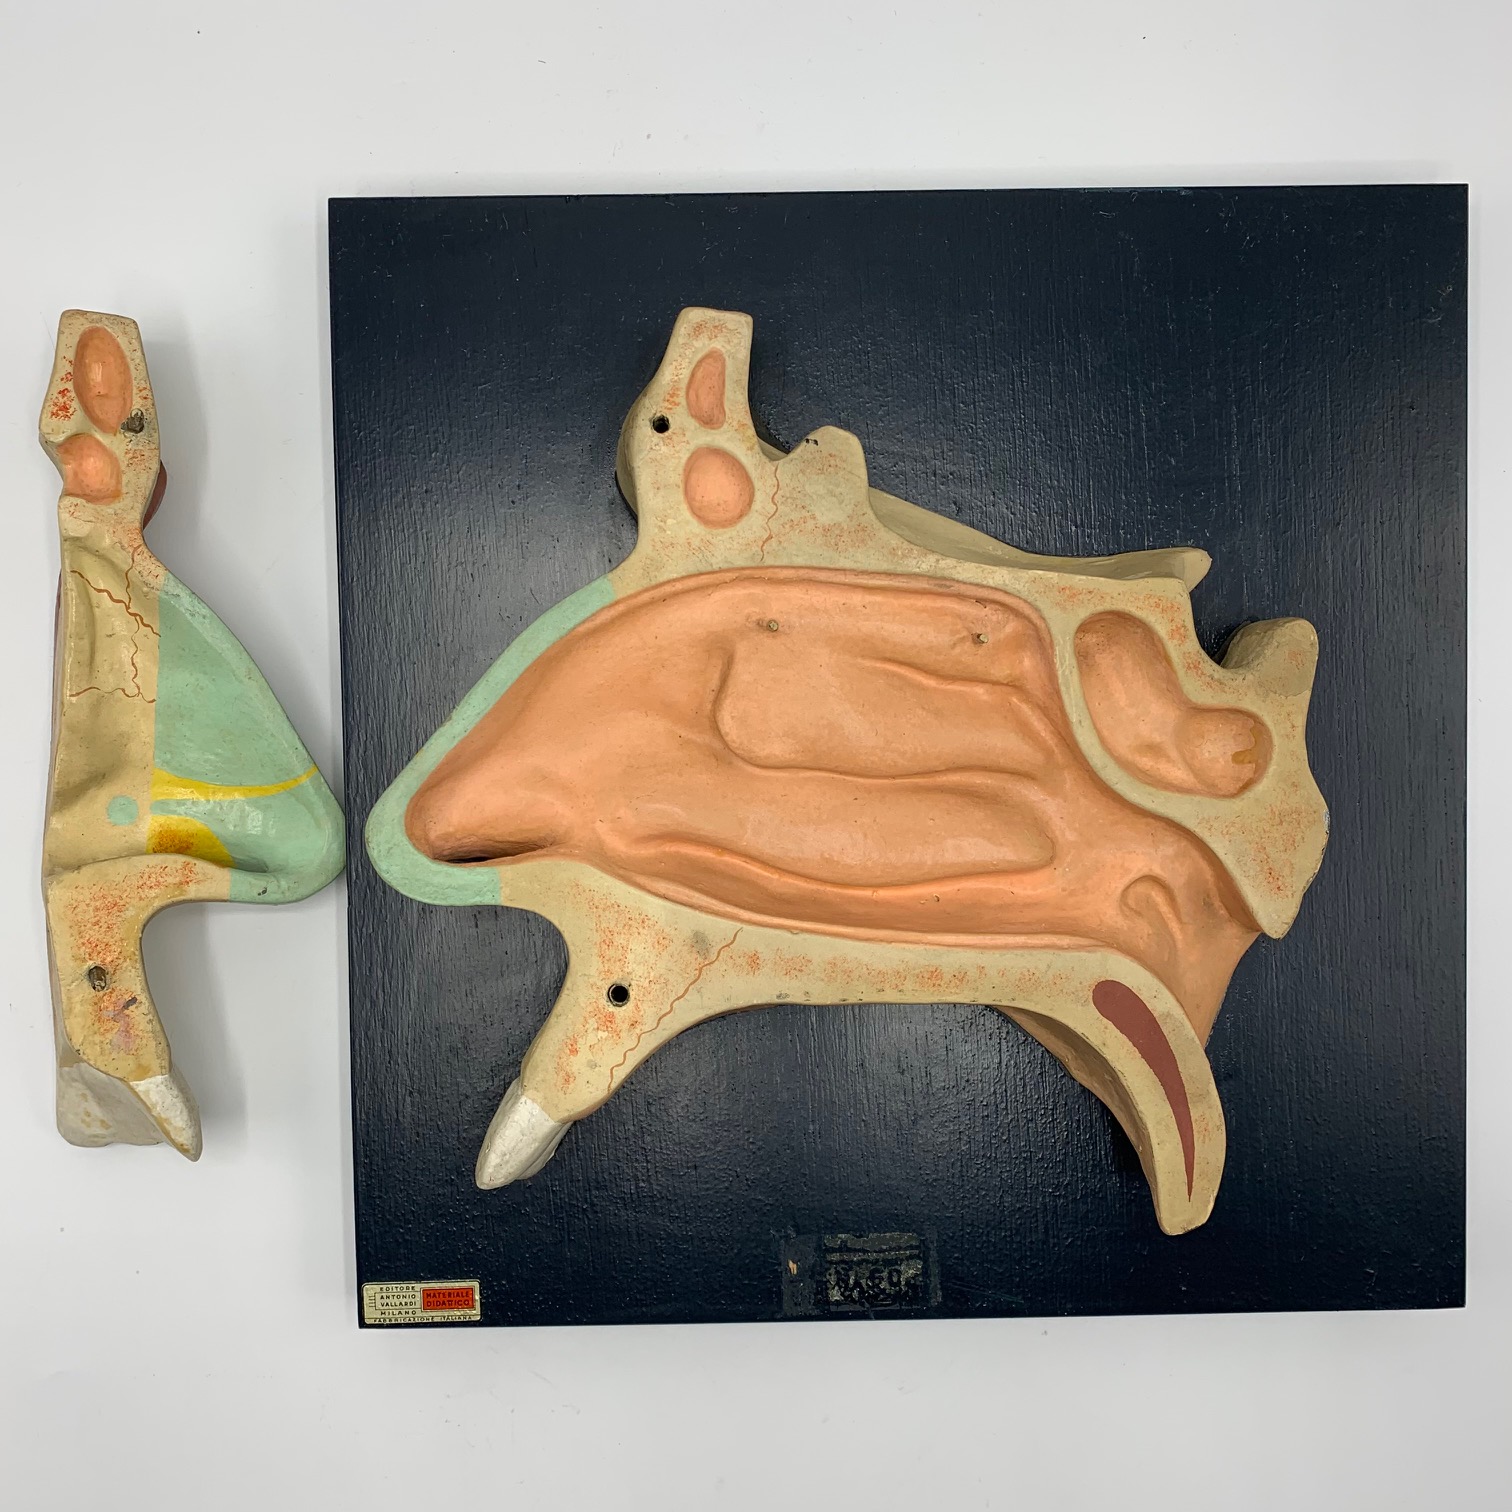 Italian anatomical model of the nose, by Antonio Vallardi